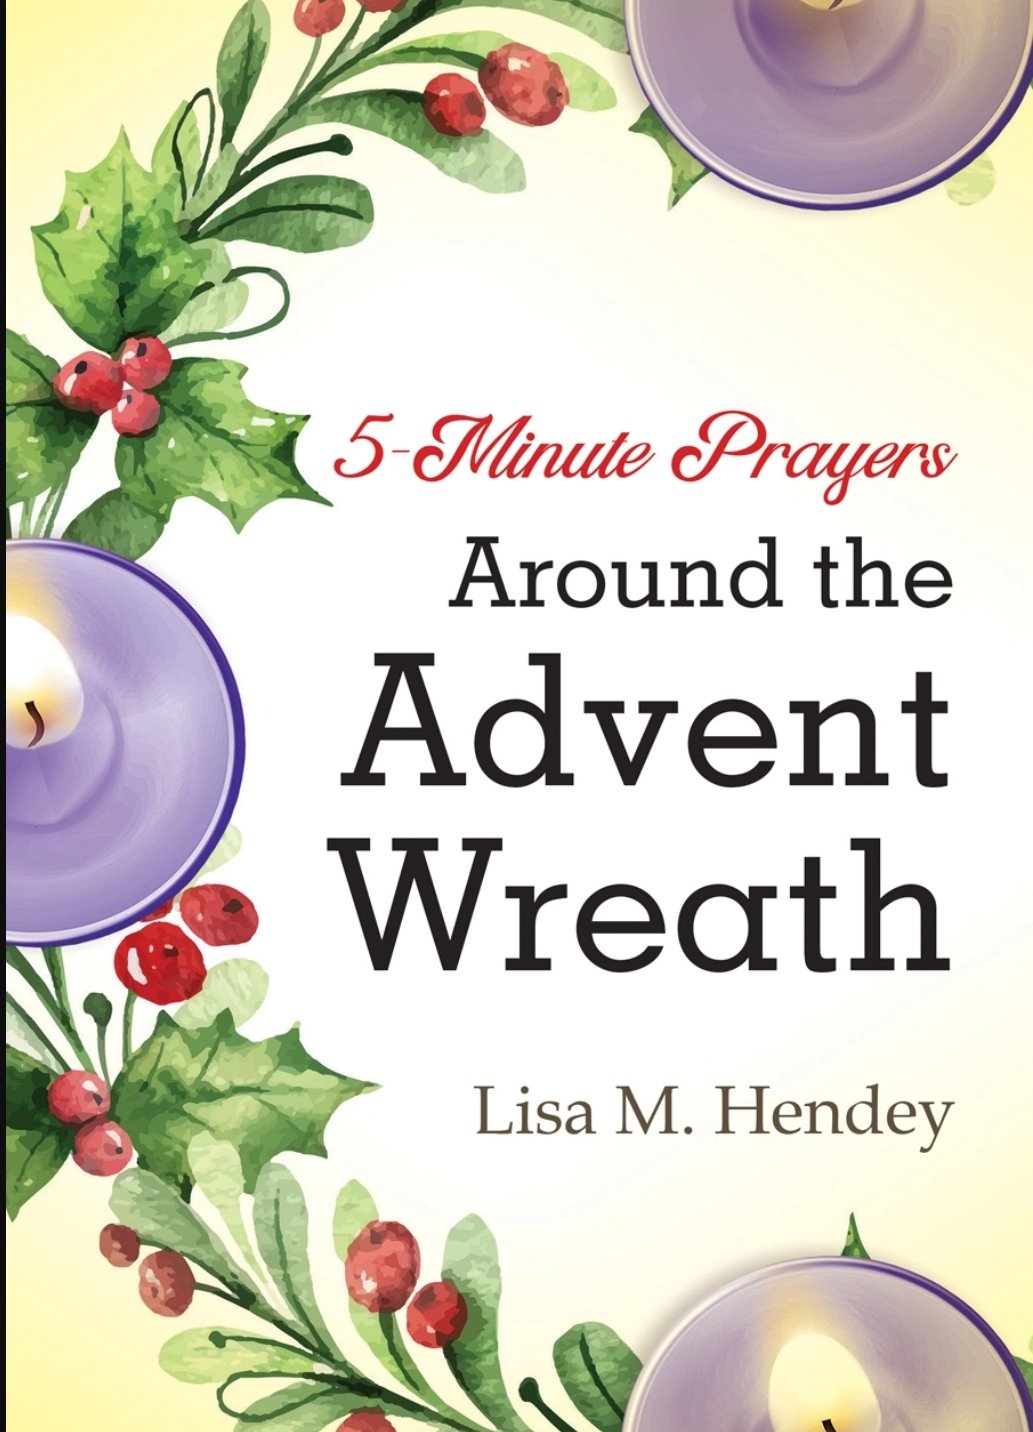 5-Minute Prayers around the Advent Wreath